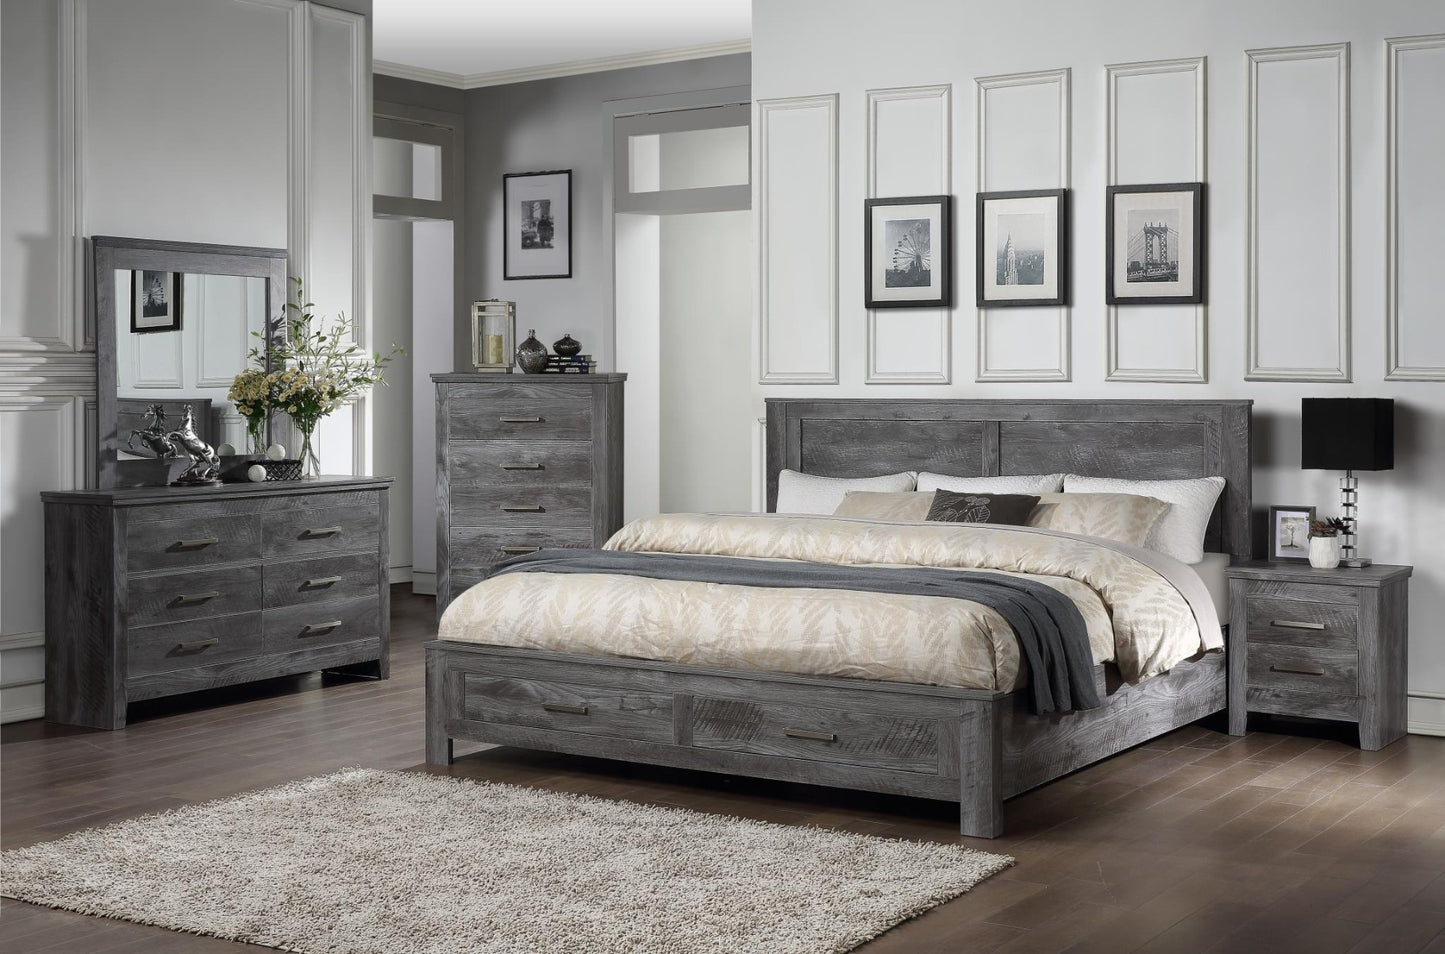 Vidalia Bedroom Collection - Rustic Grey Oak Finish